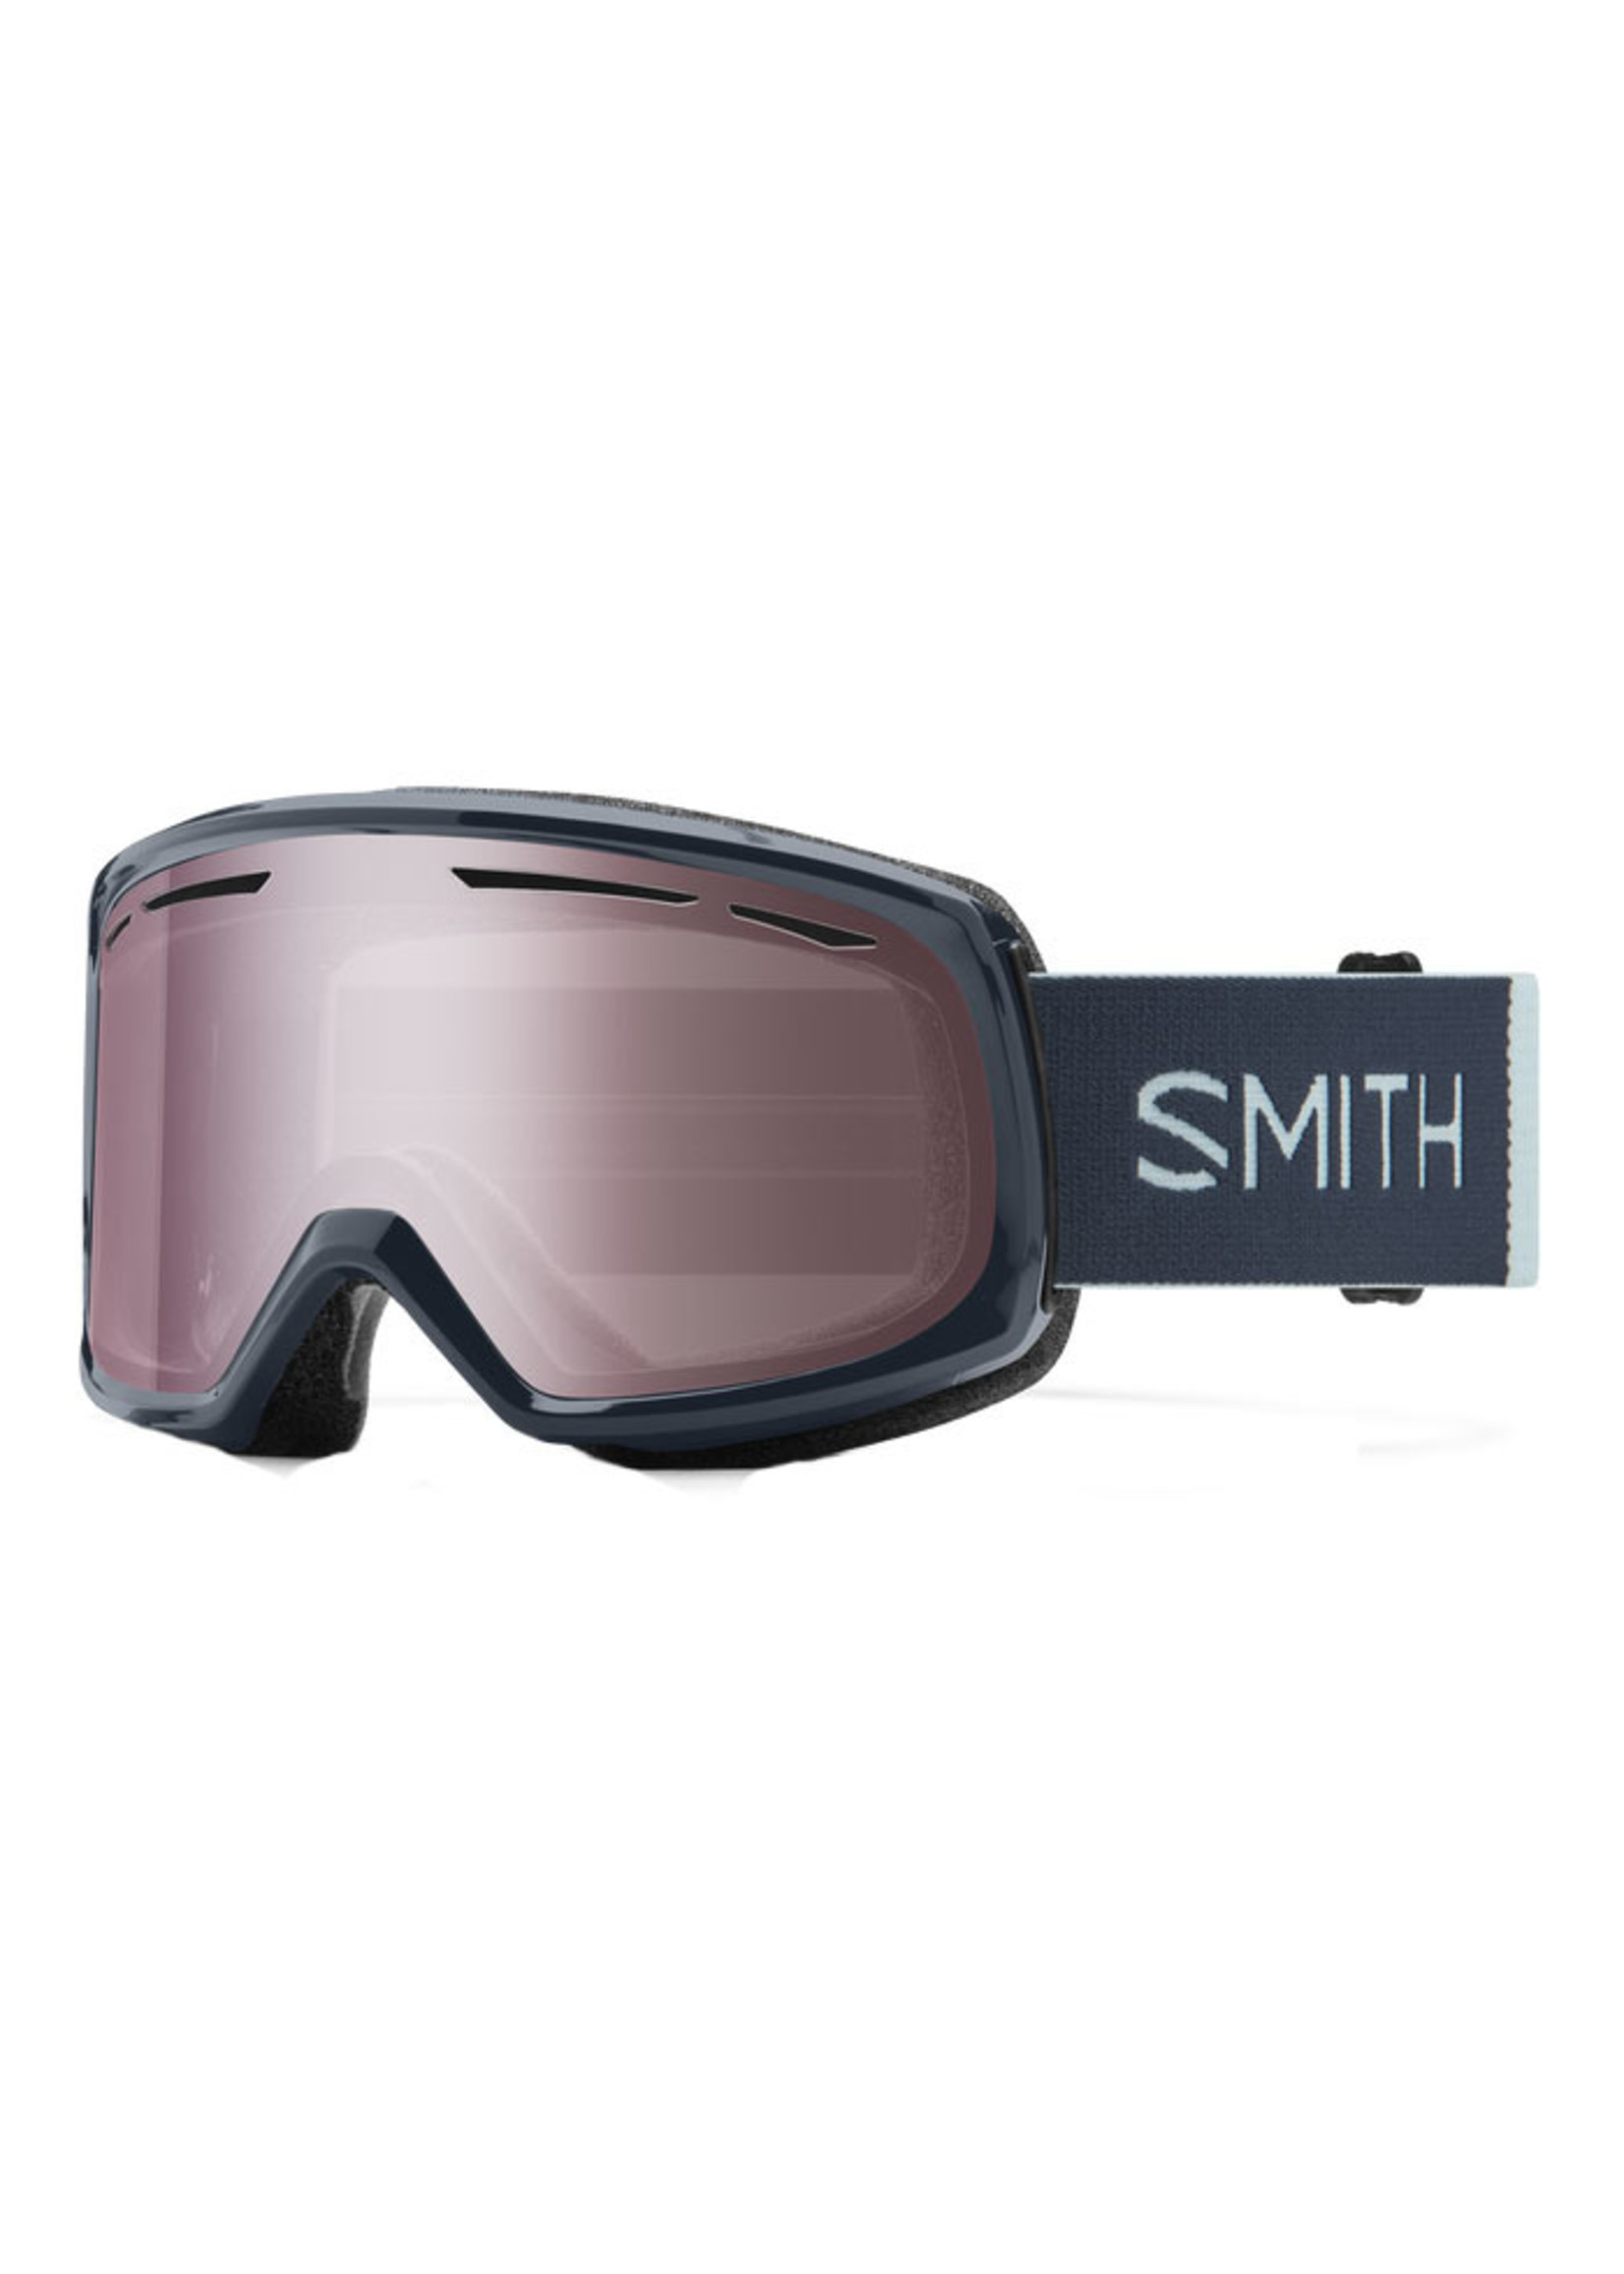 Smith Optics SMITH DRIFT GOGGLE